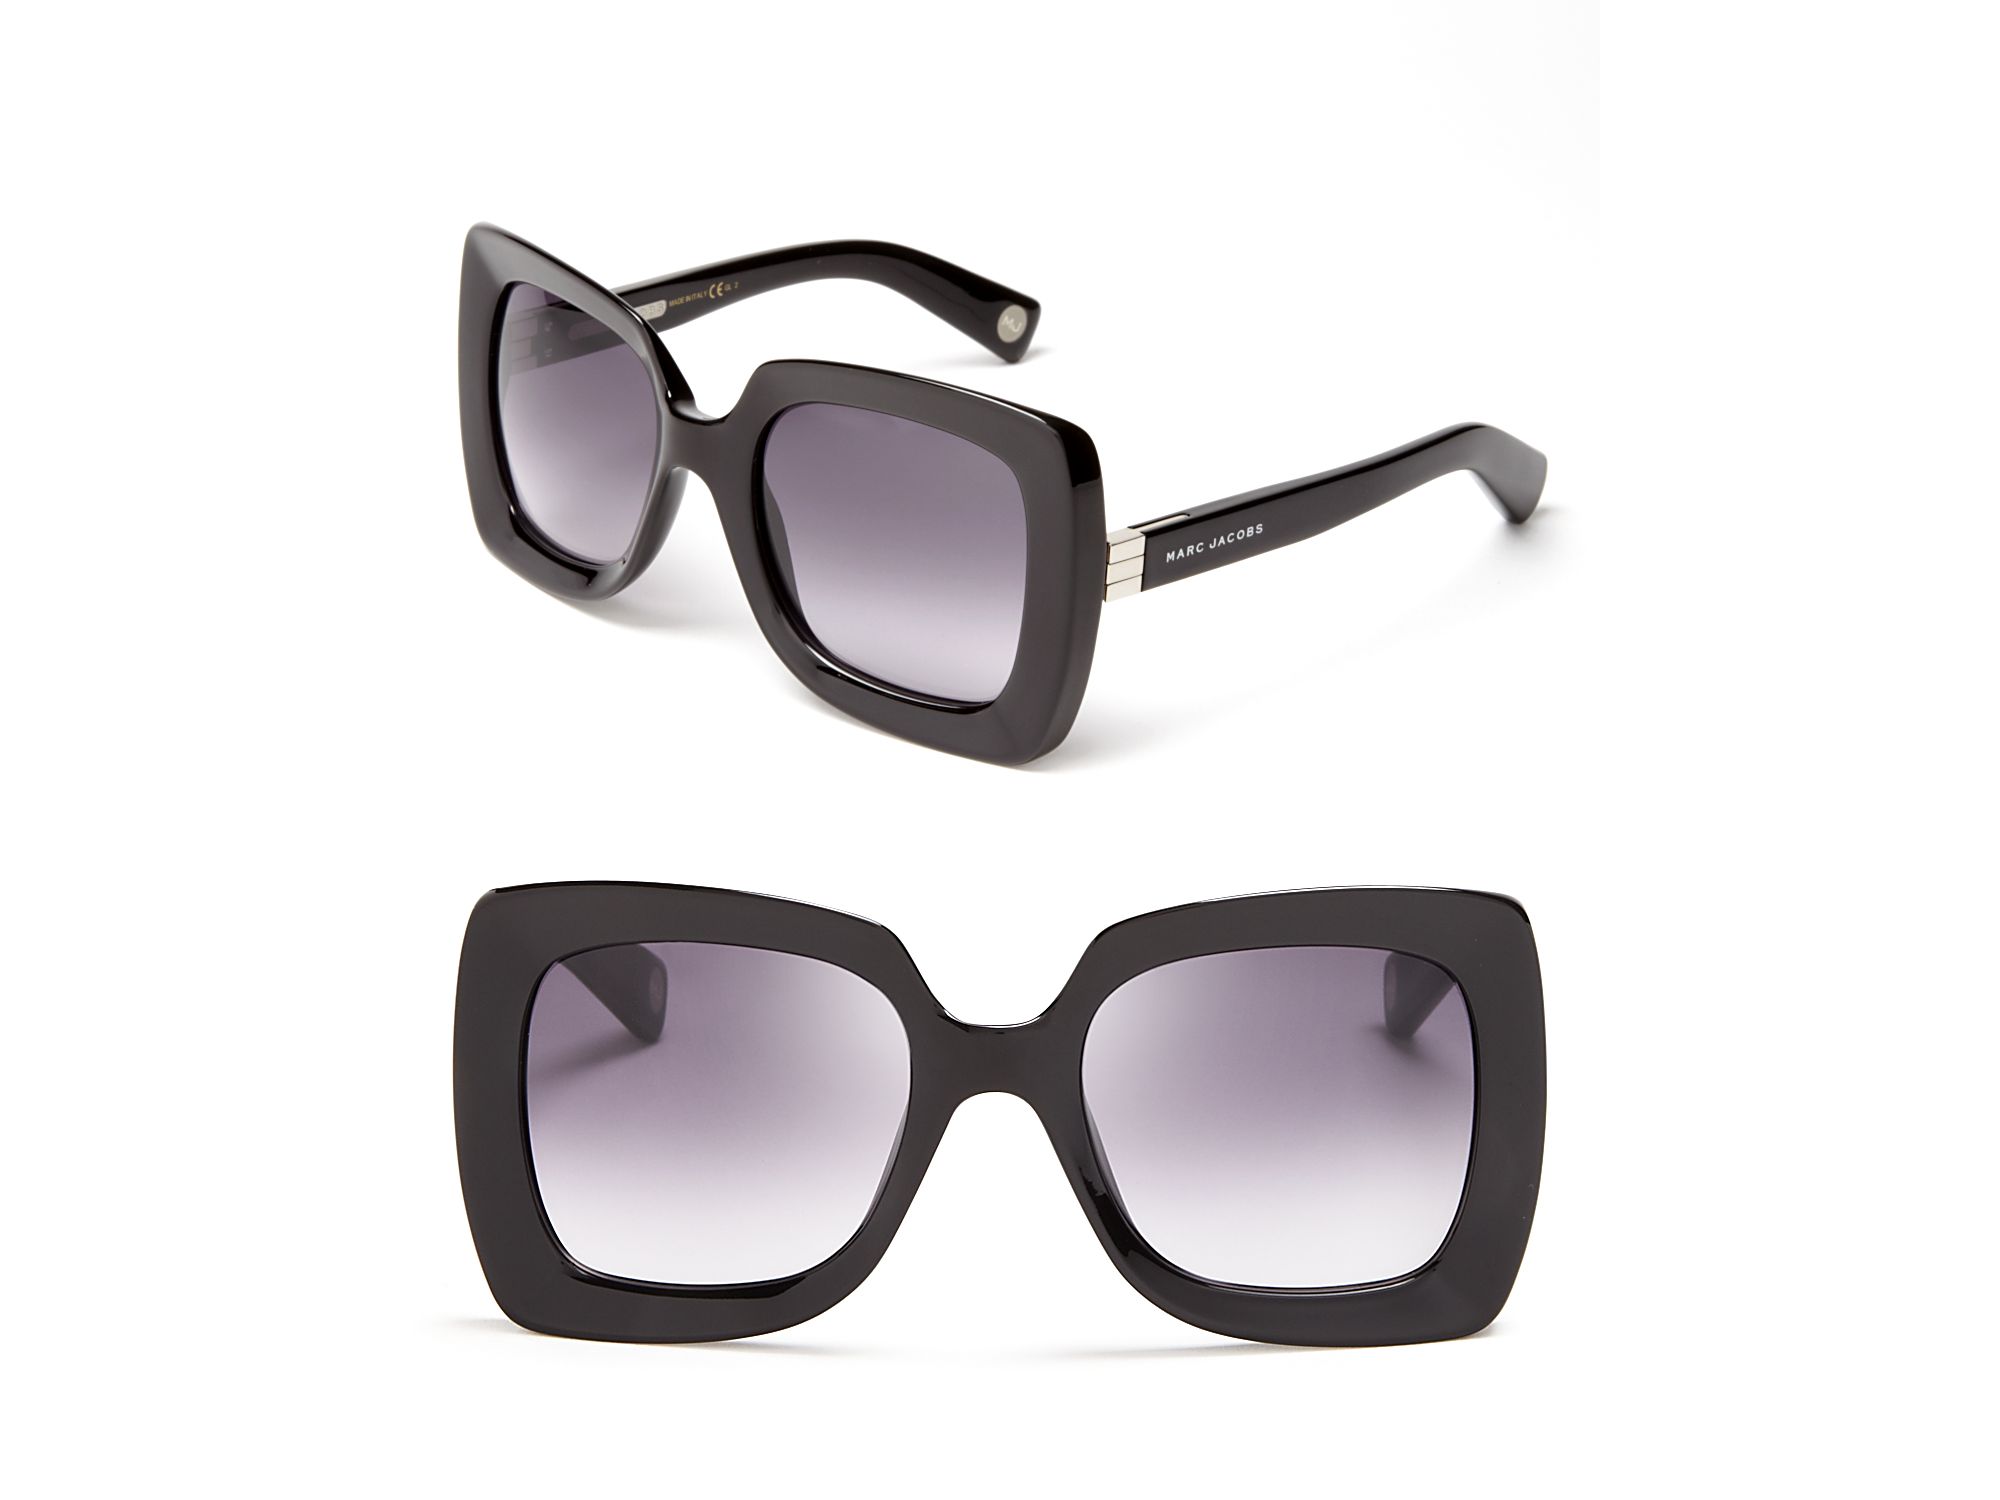 Marc Jacobs Oversized Mod Square Sunglasses in Shiny Black (Black) - Lyst